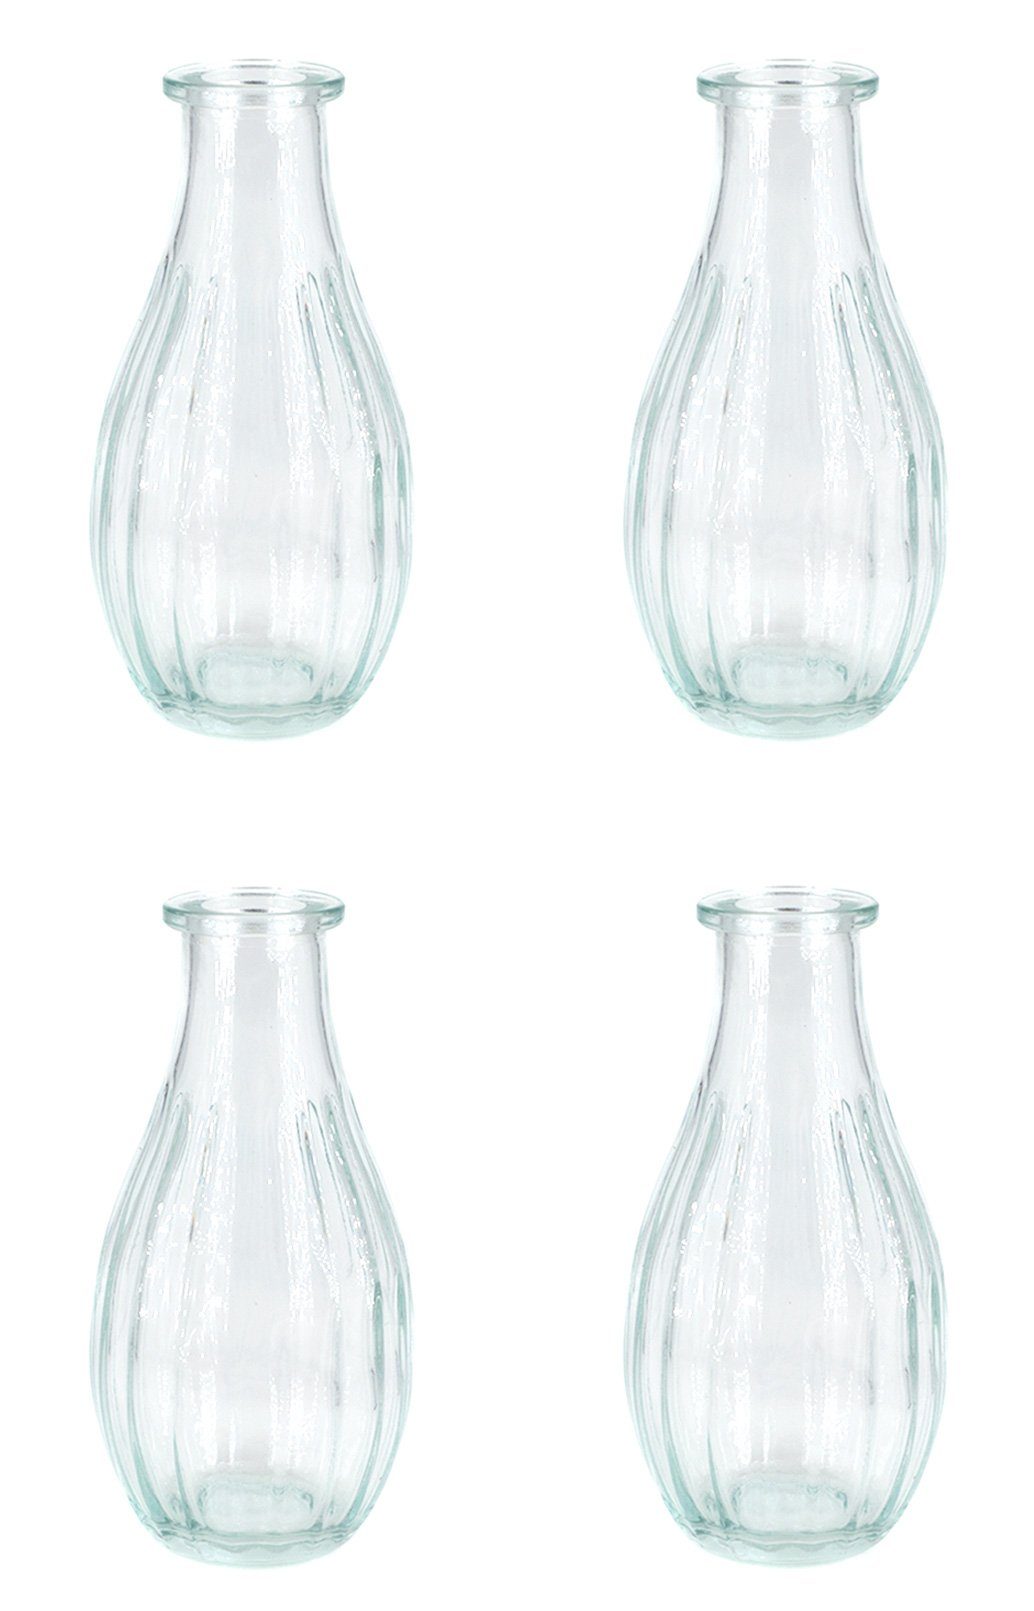 Creativery Dekovase, Vasen Glas gerillt 14cm klar transparent 240ml, 4er Set